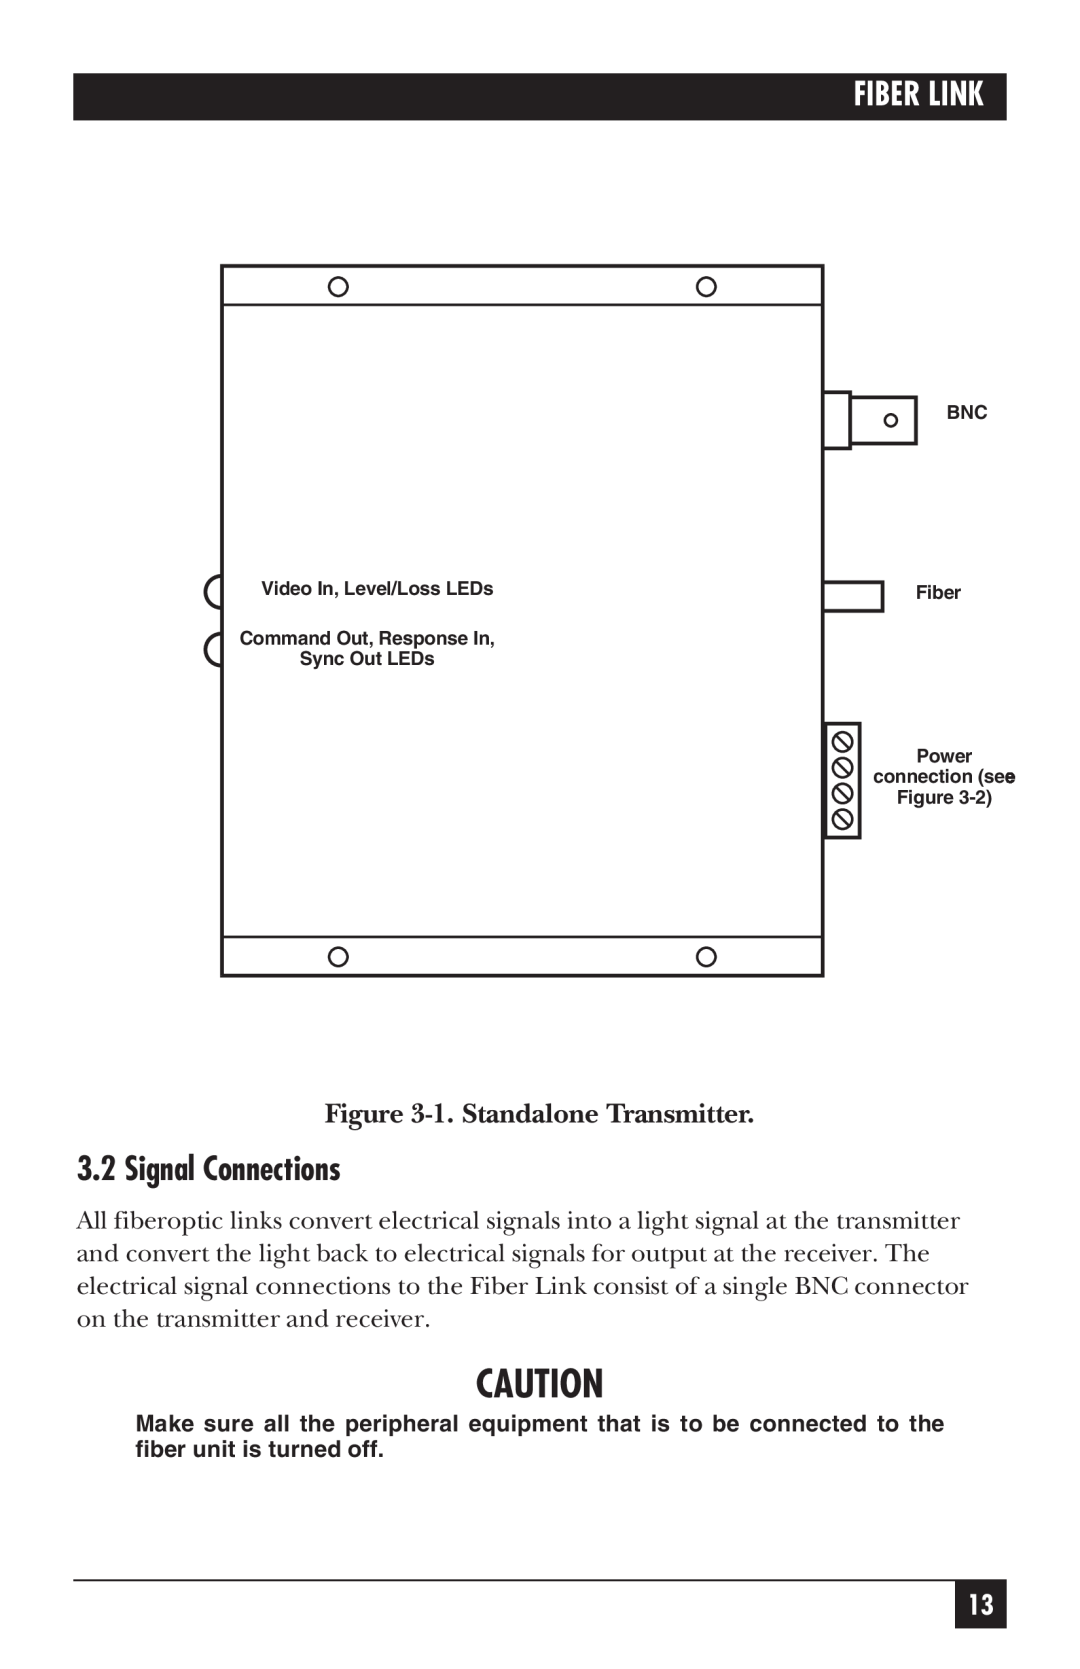 Black Box AC455A-TX-R2, AC456A-RX-R2 manual Signal Connections, 1. Standalone Transmitter, Fiber Link 